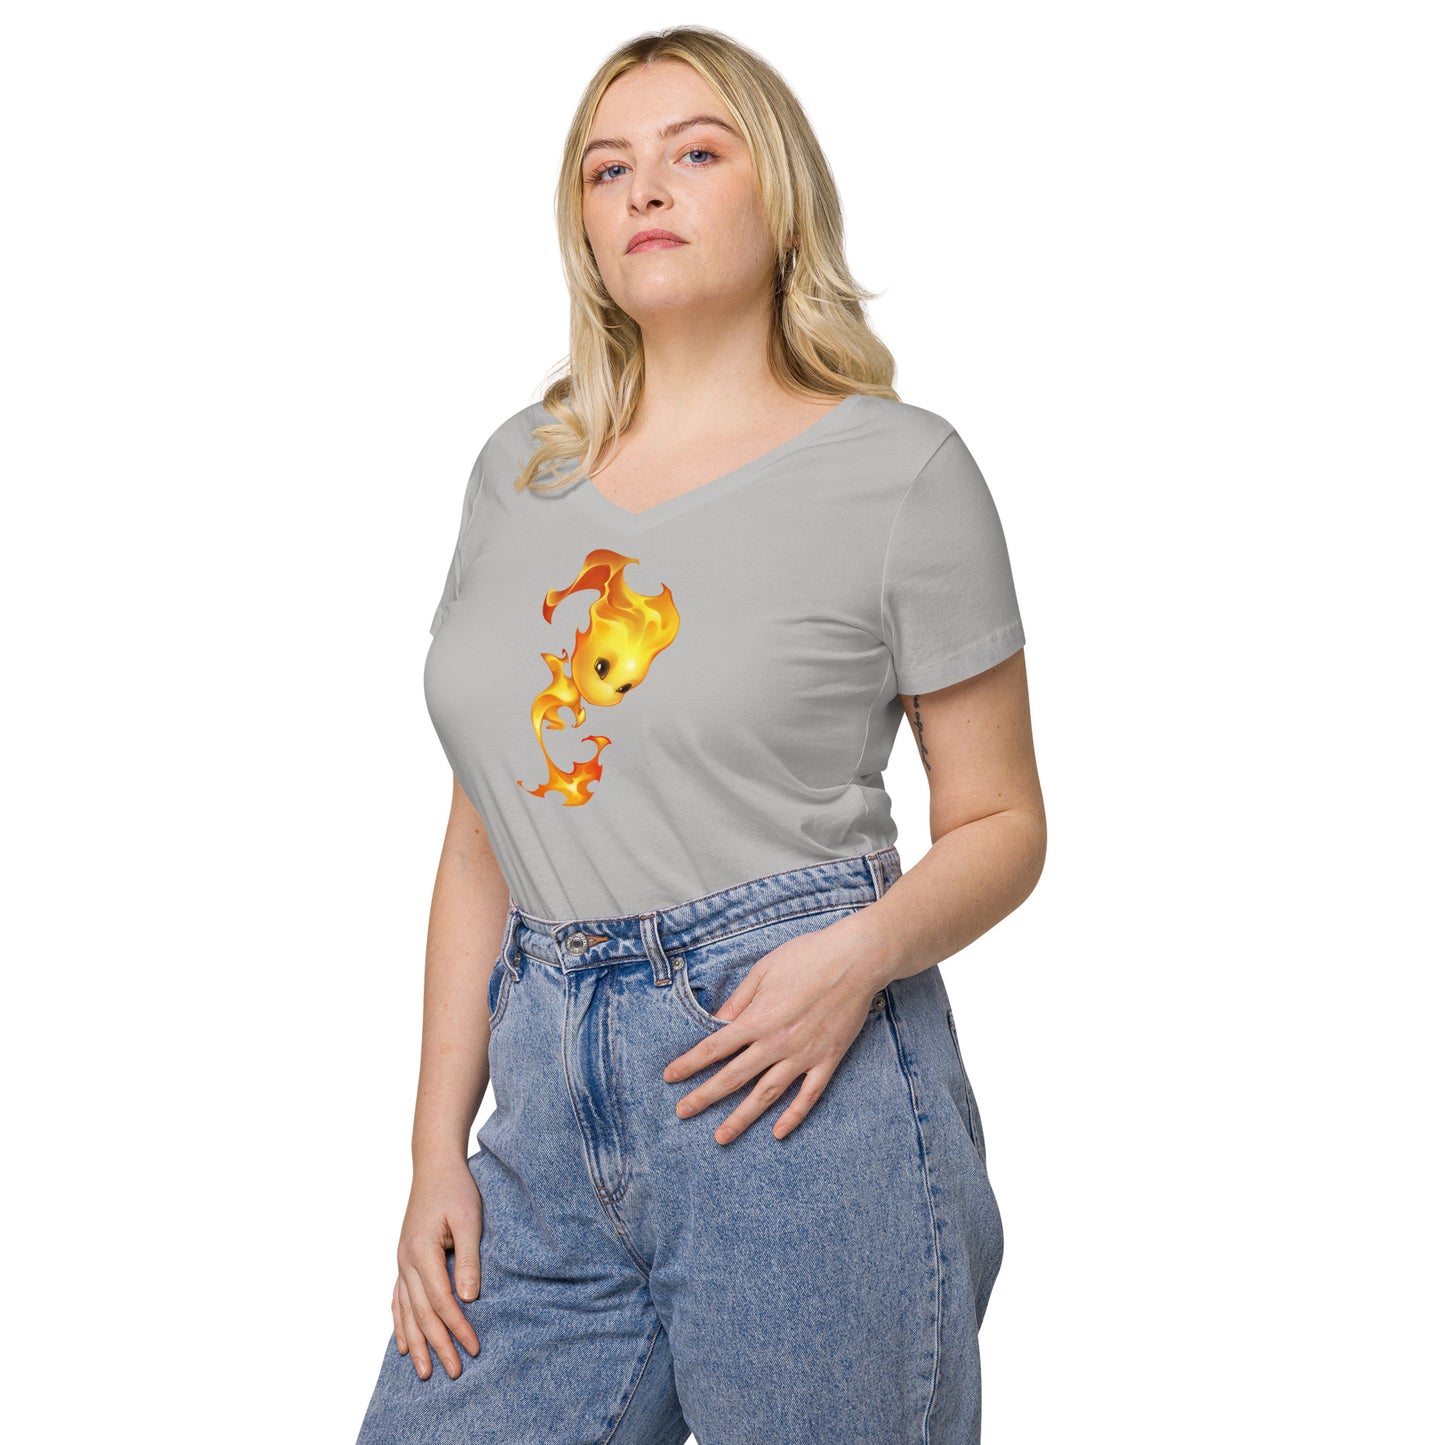 Women’s fitted v-neck t-shirt: Sparker